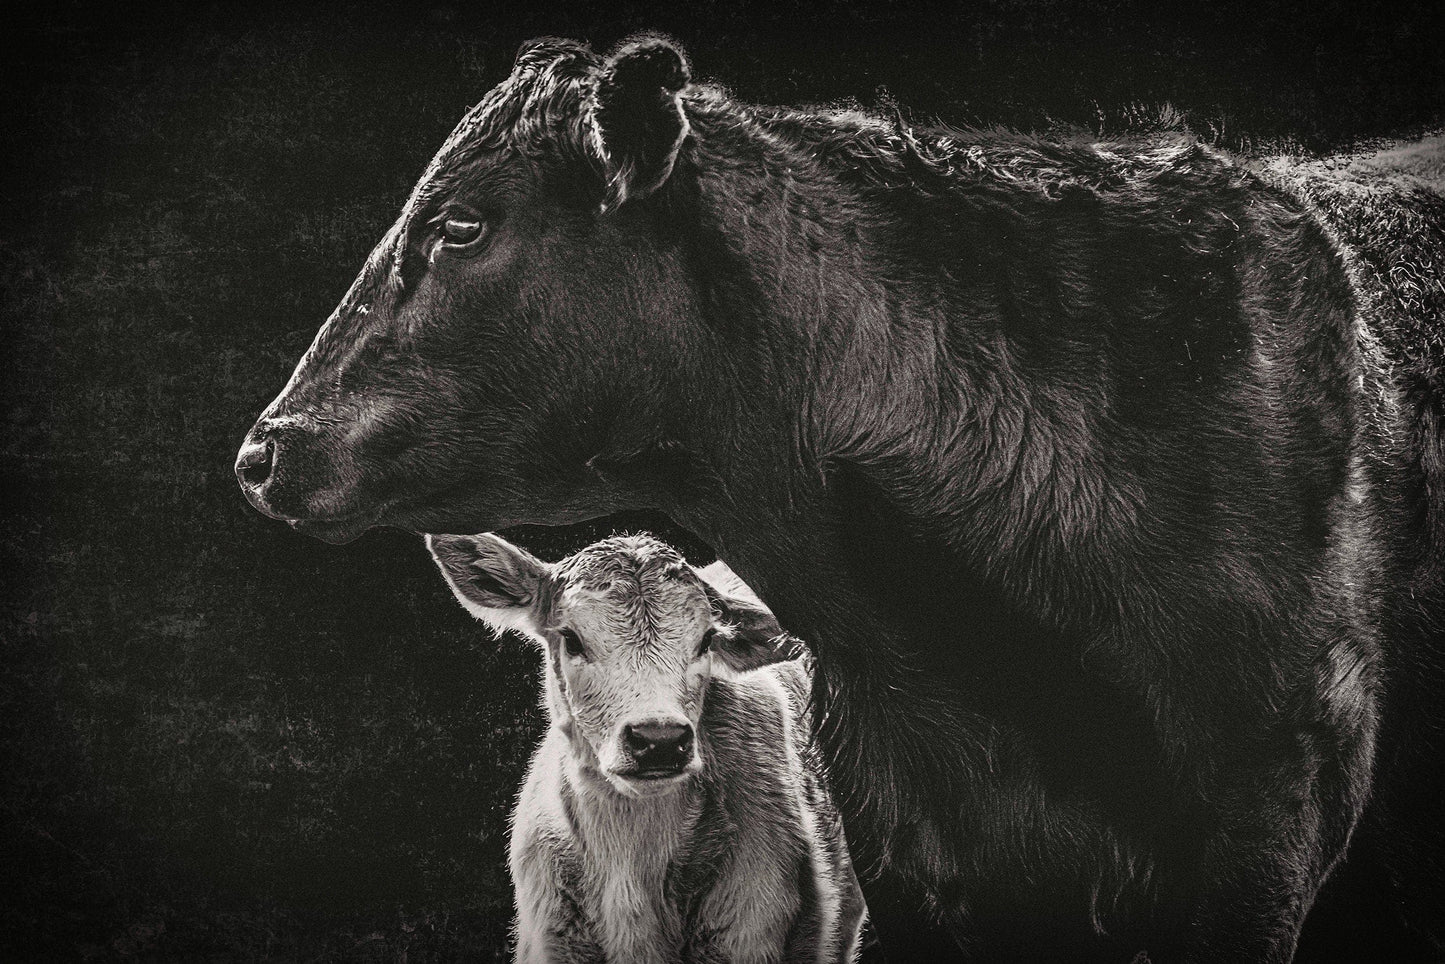 Teri James Photography Wall Art Paper Photo Print / 12 x 18 Inches Black Angus Cow & Calf in Black & White - Modern Western Canvas Art